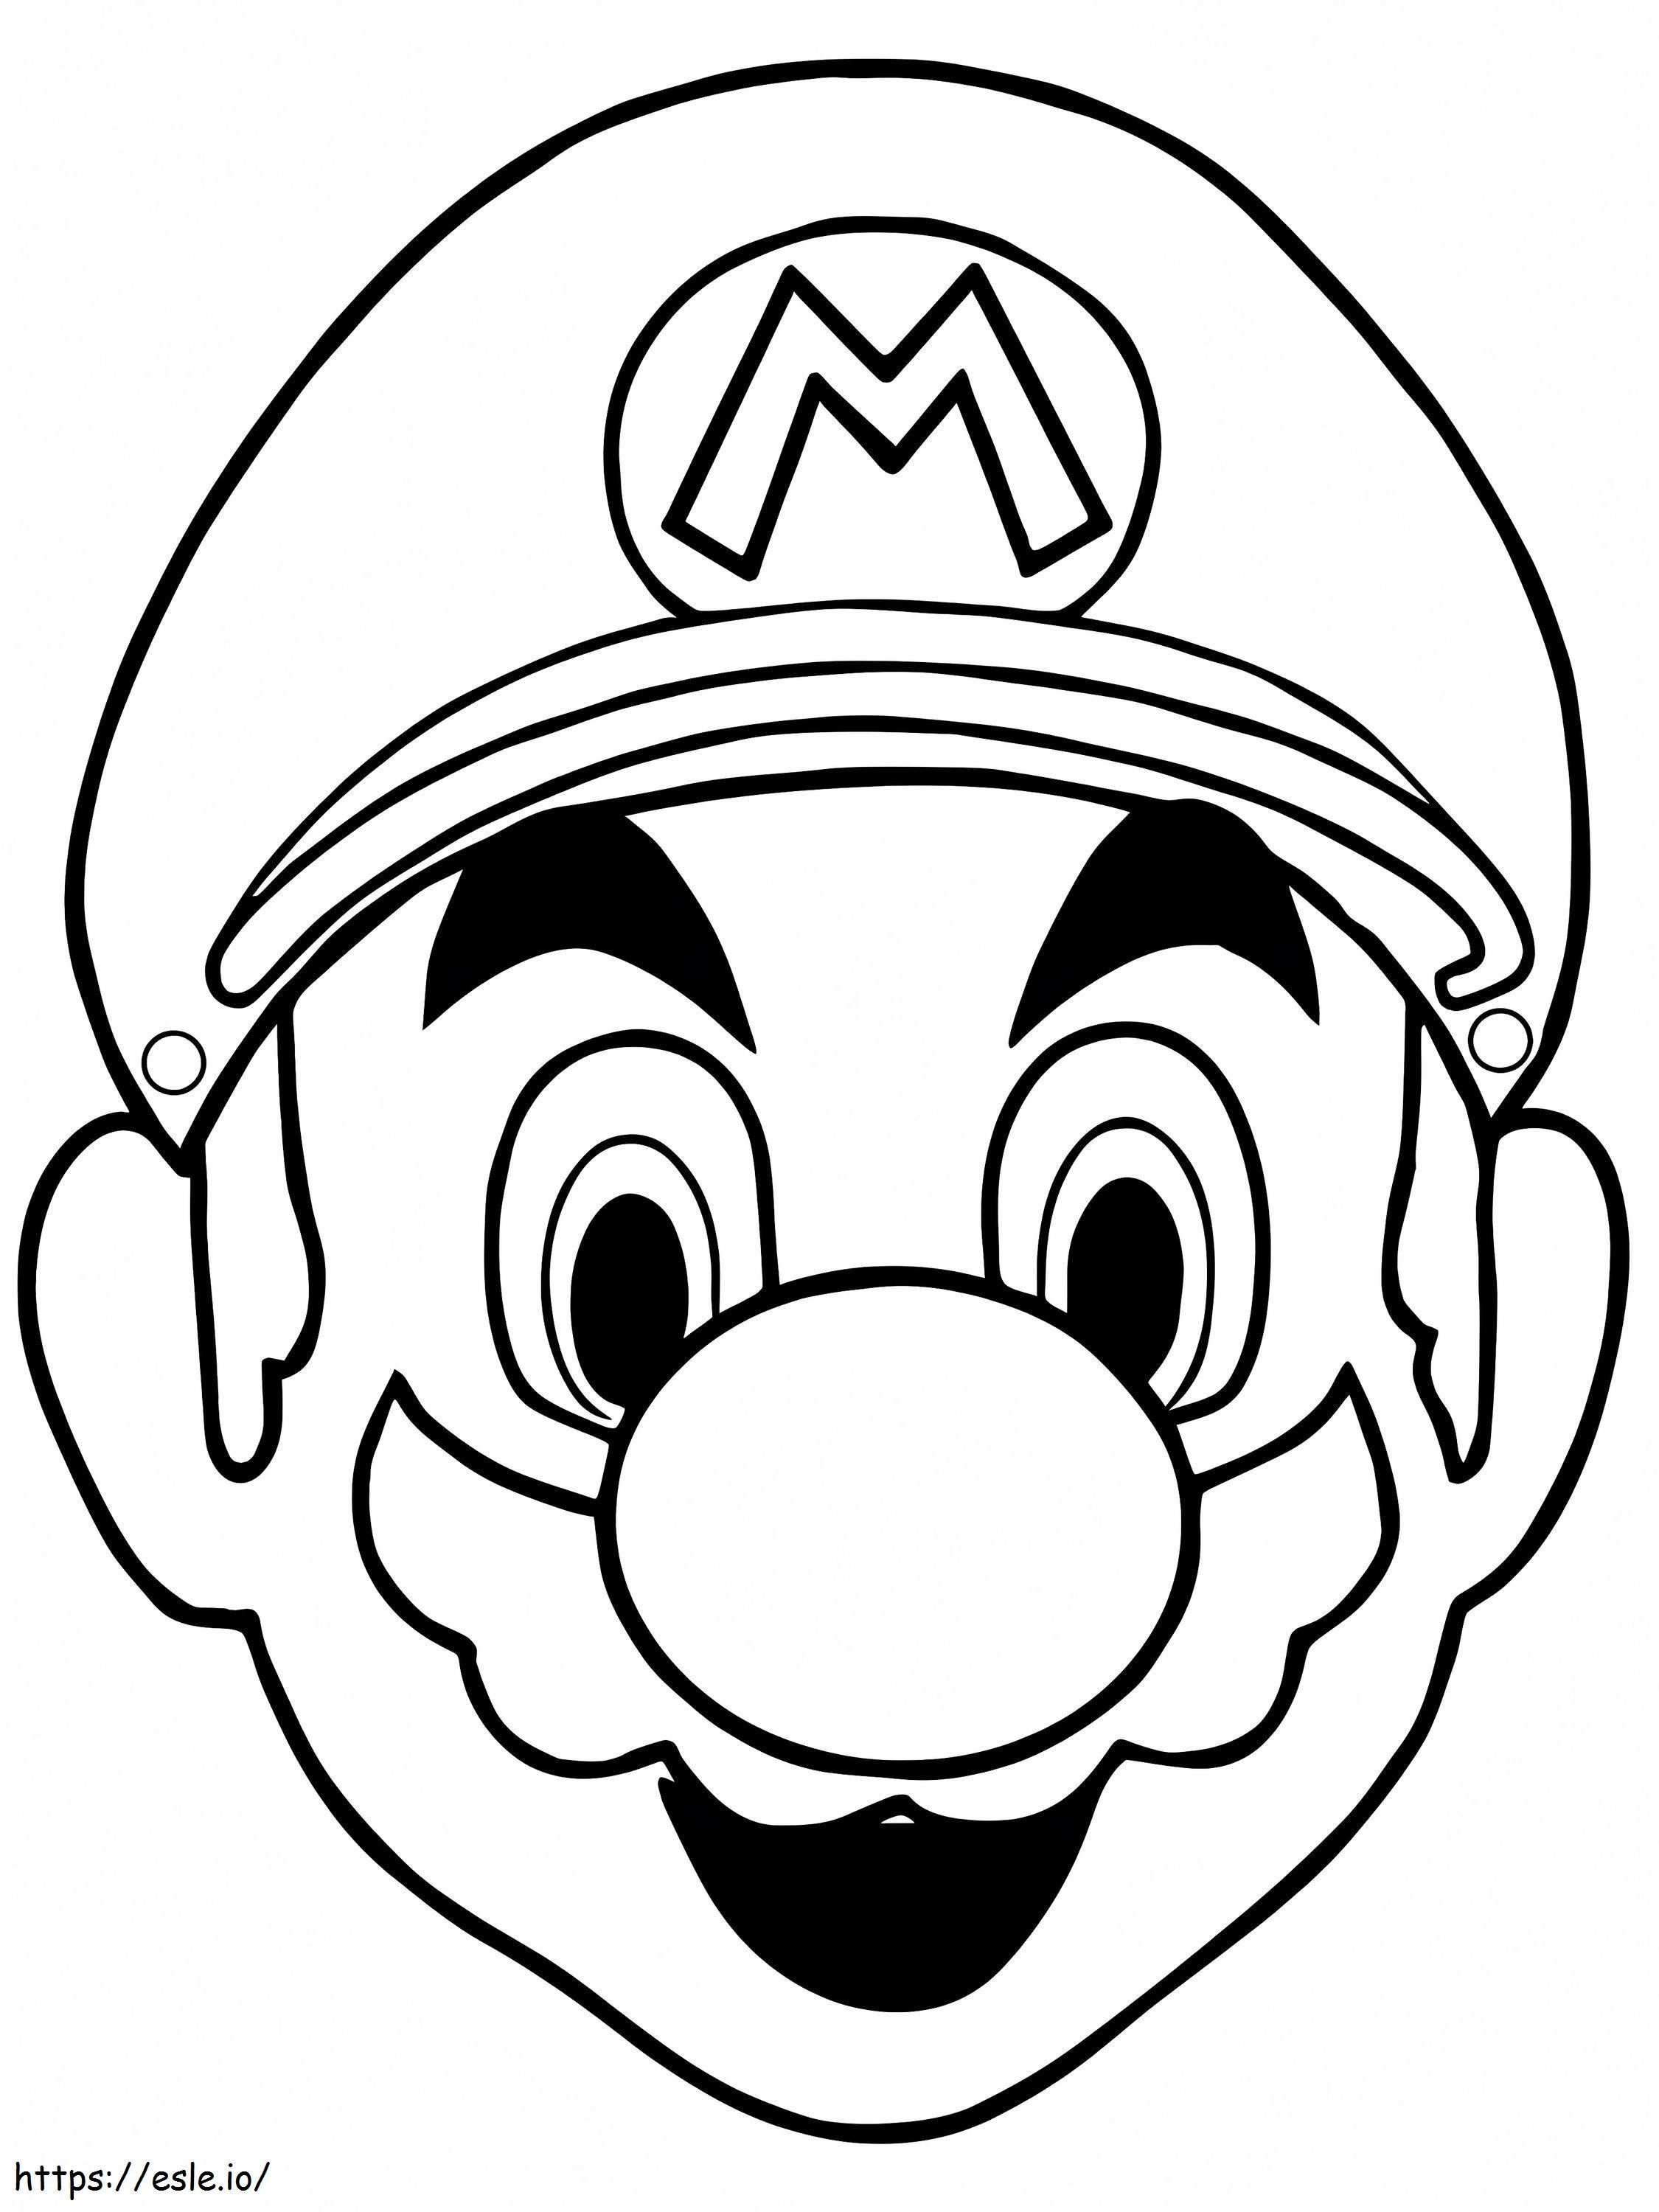 Coloriage Visage de Mario 768X1024 à imprimer dessin